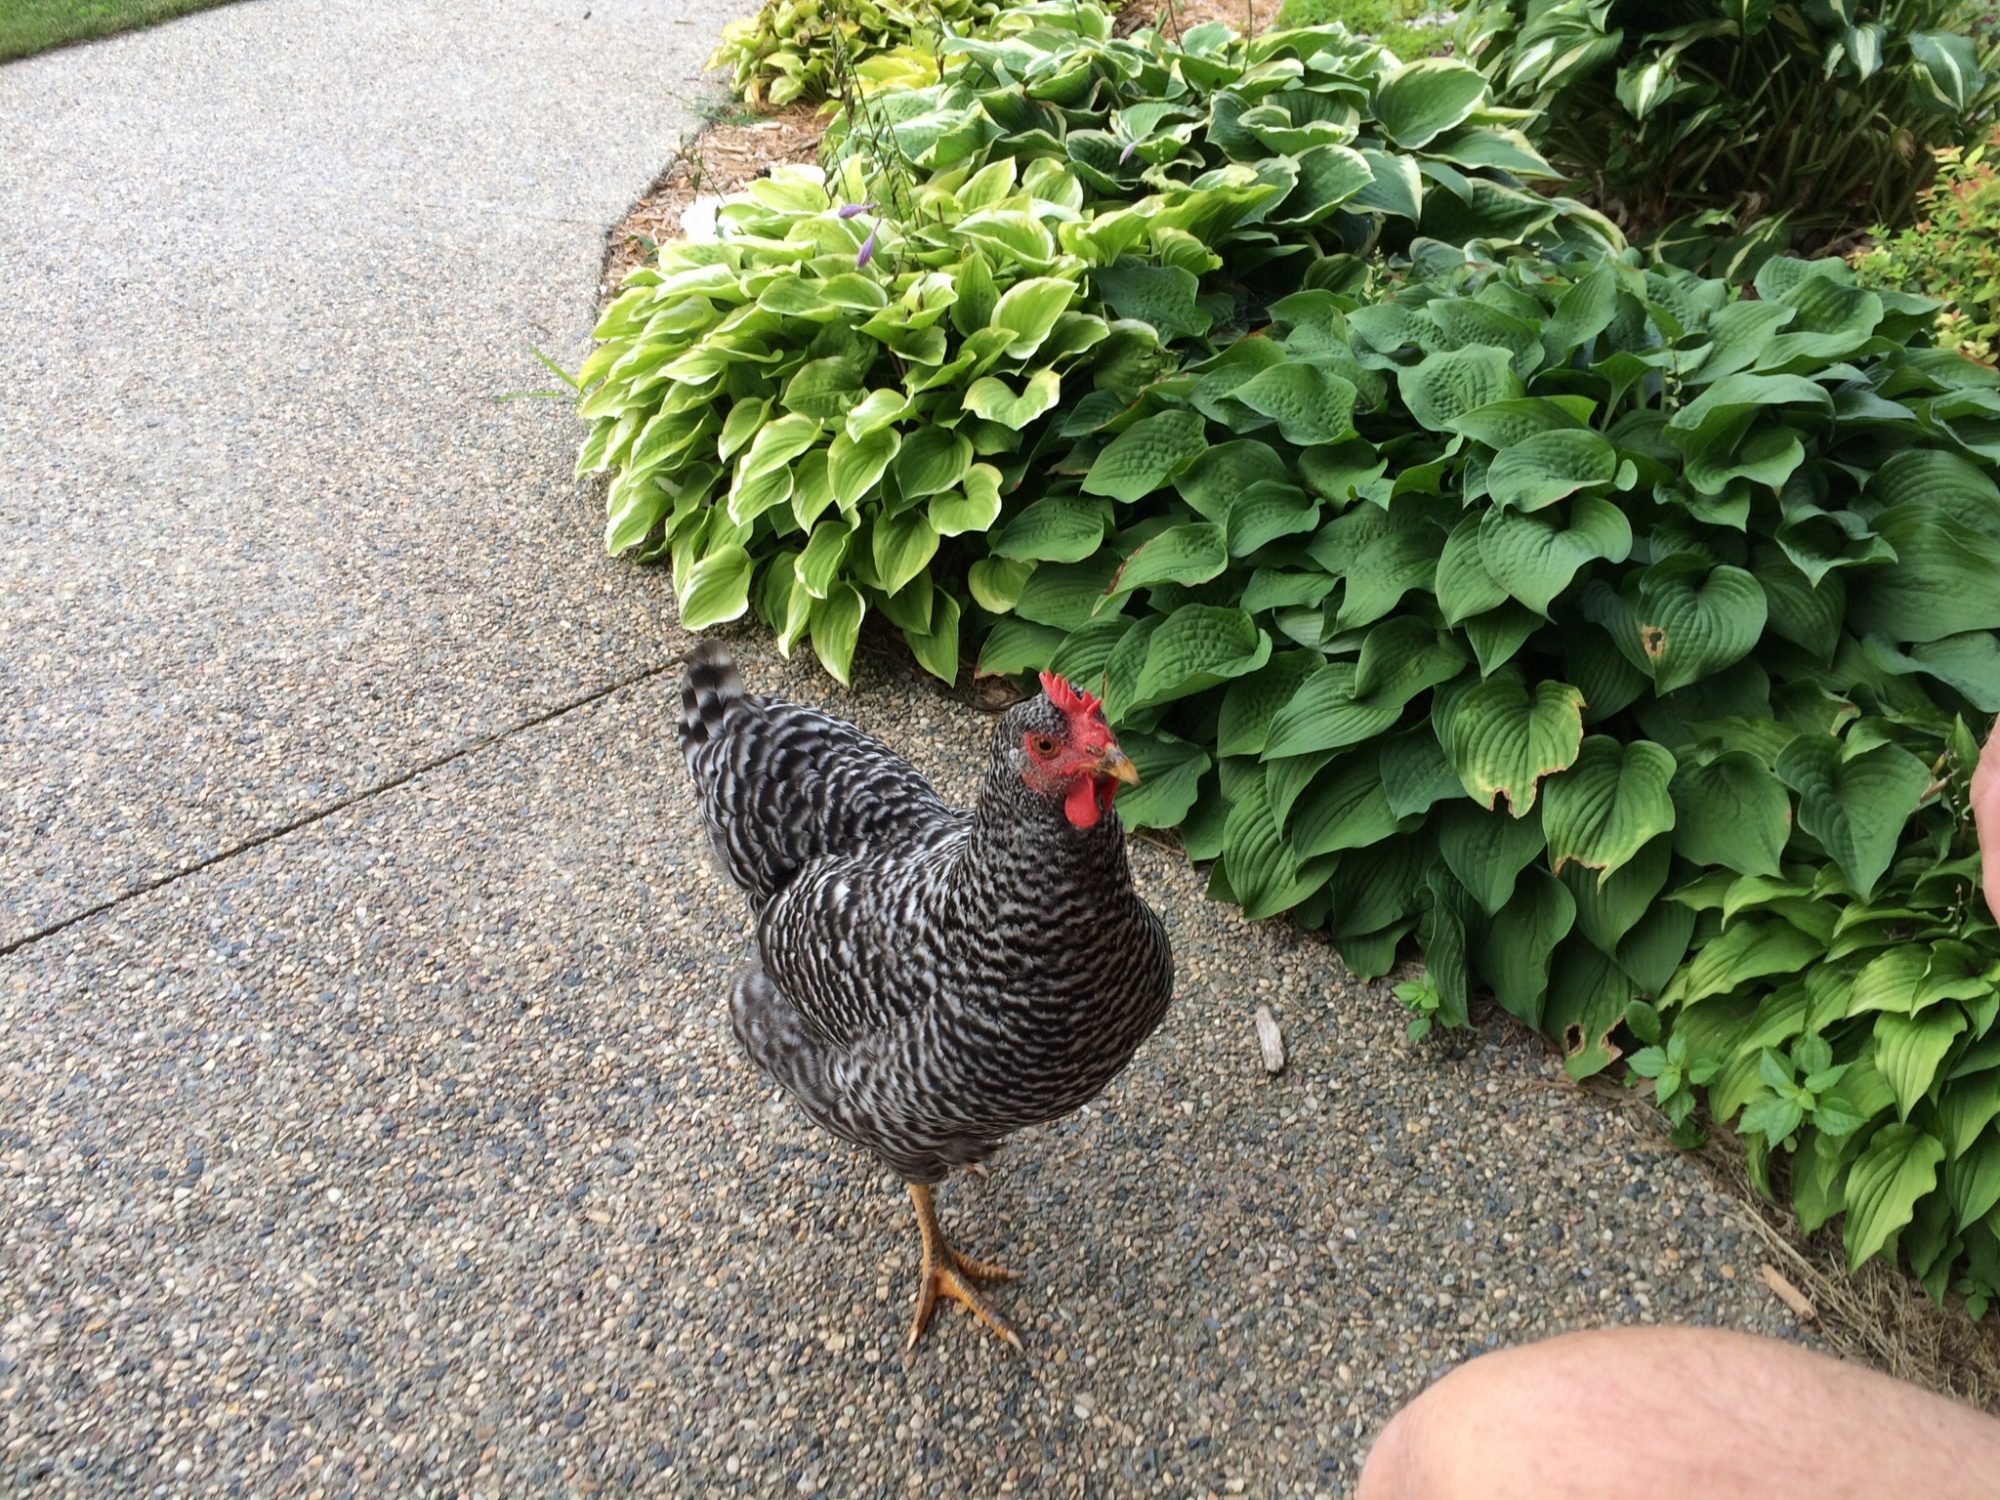 Henrietta is the most inquisitive hen!